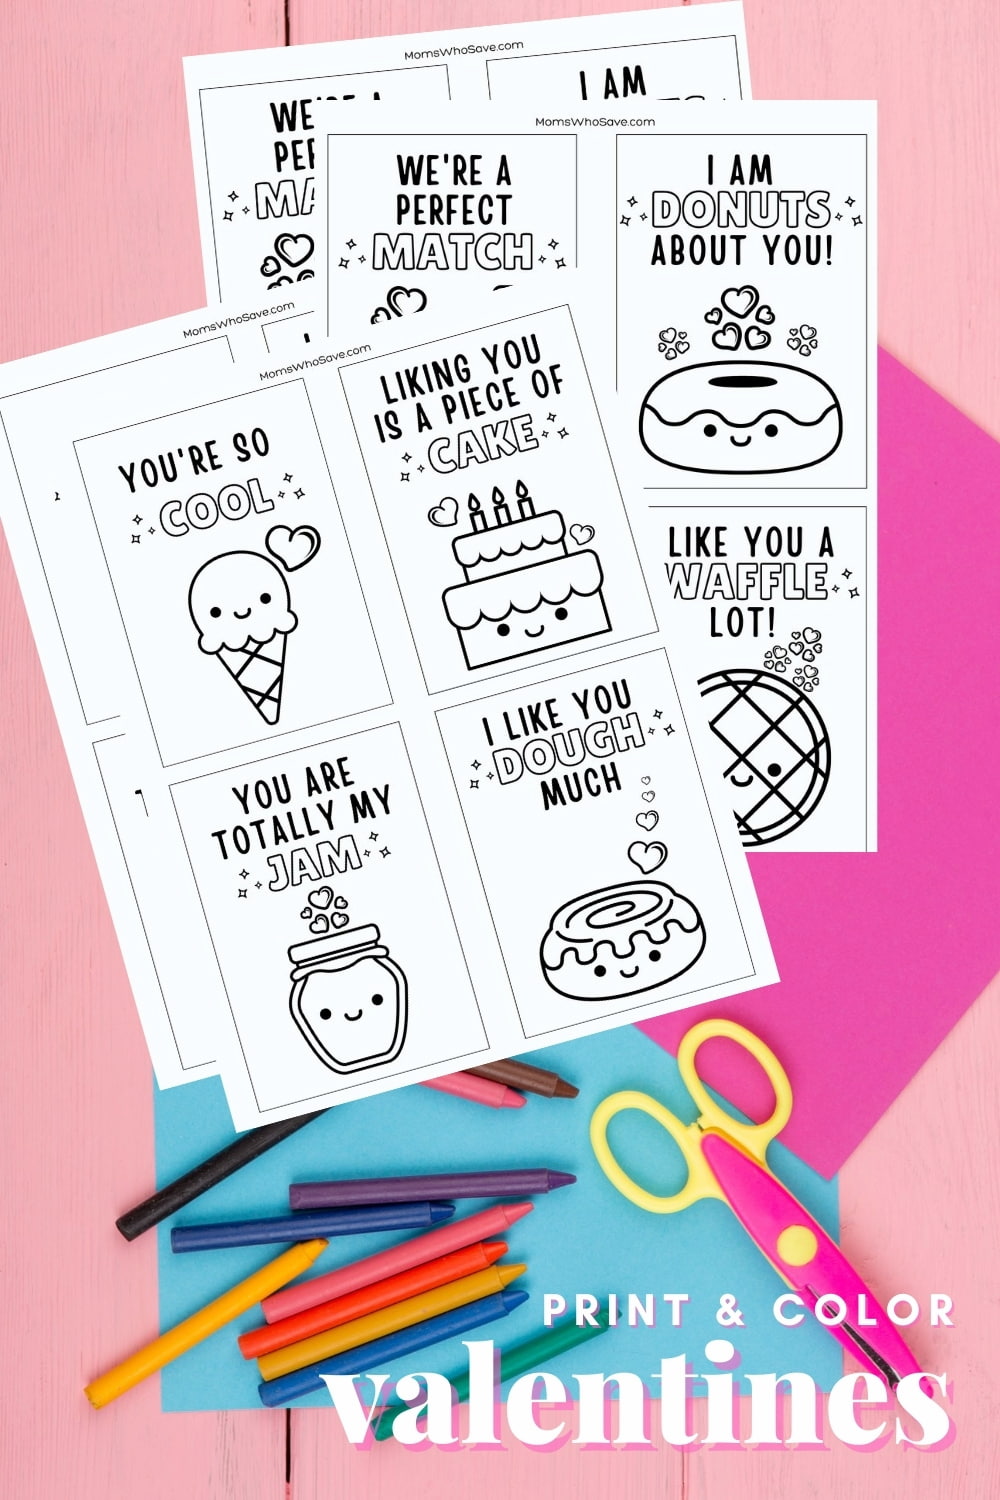 Free Printable Valentines for Kids